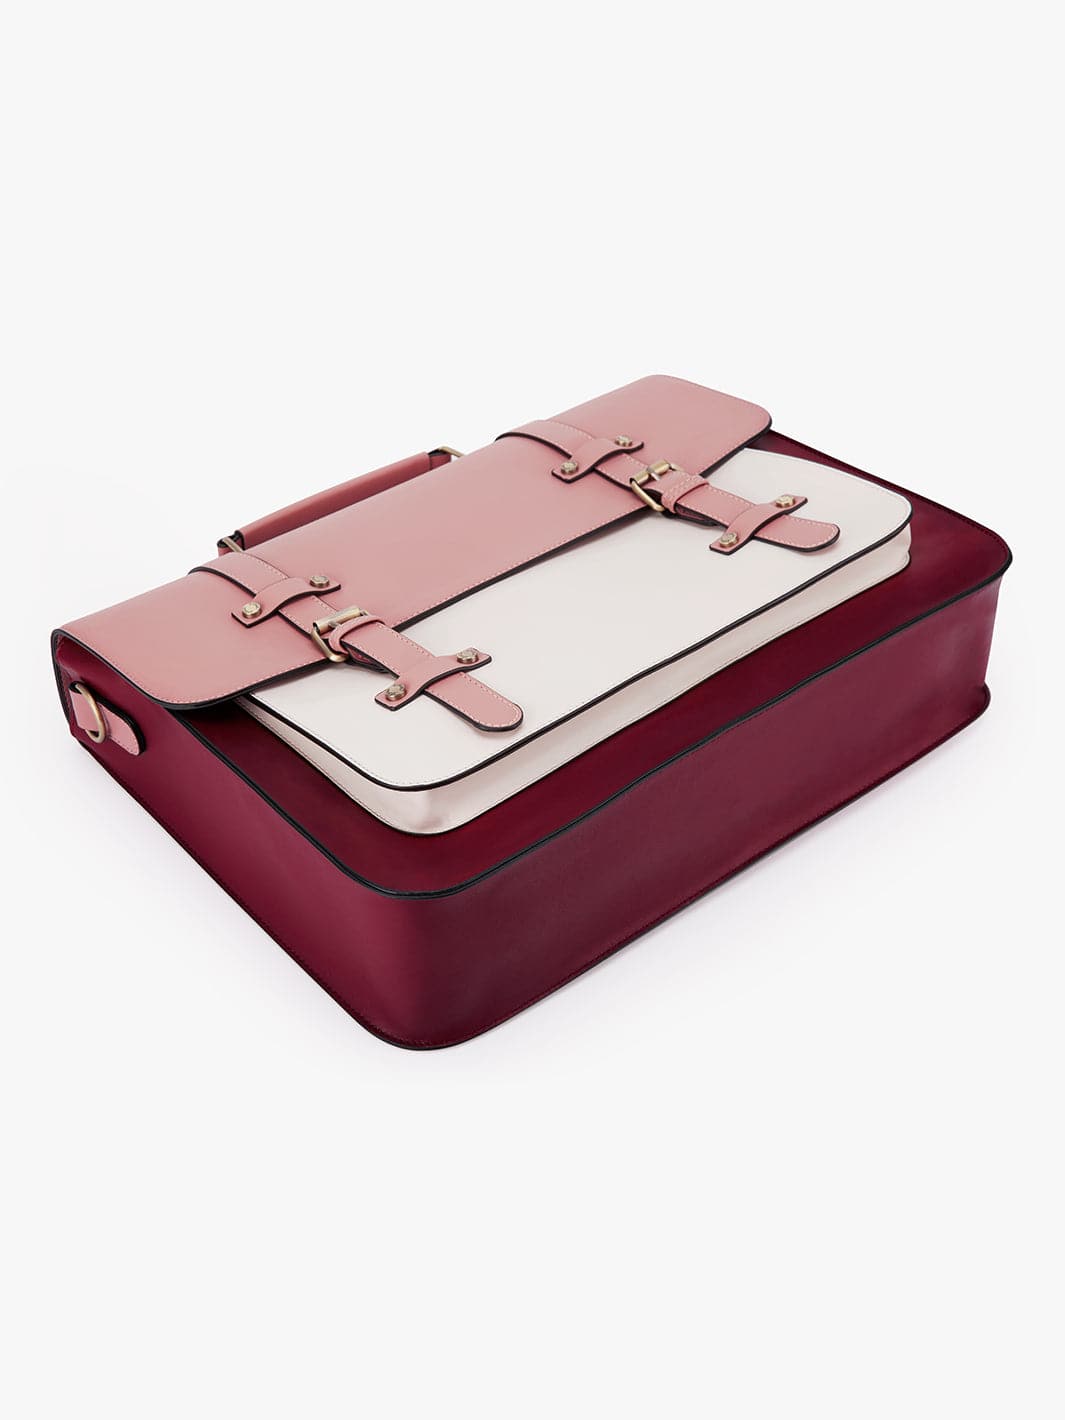 Sombre Vintage 15.6 inch Pink PU Leather Handbag for Girl - Ecosusi